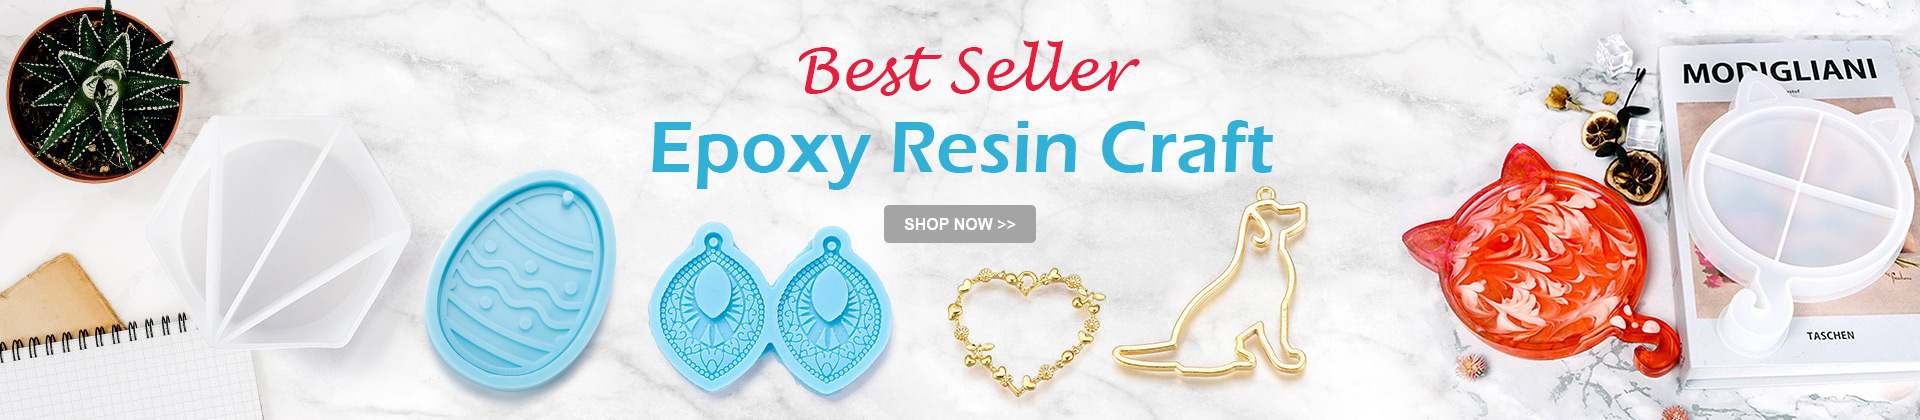 Best Seller Epoxy Resin Craft